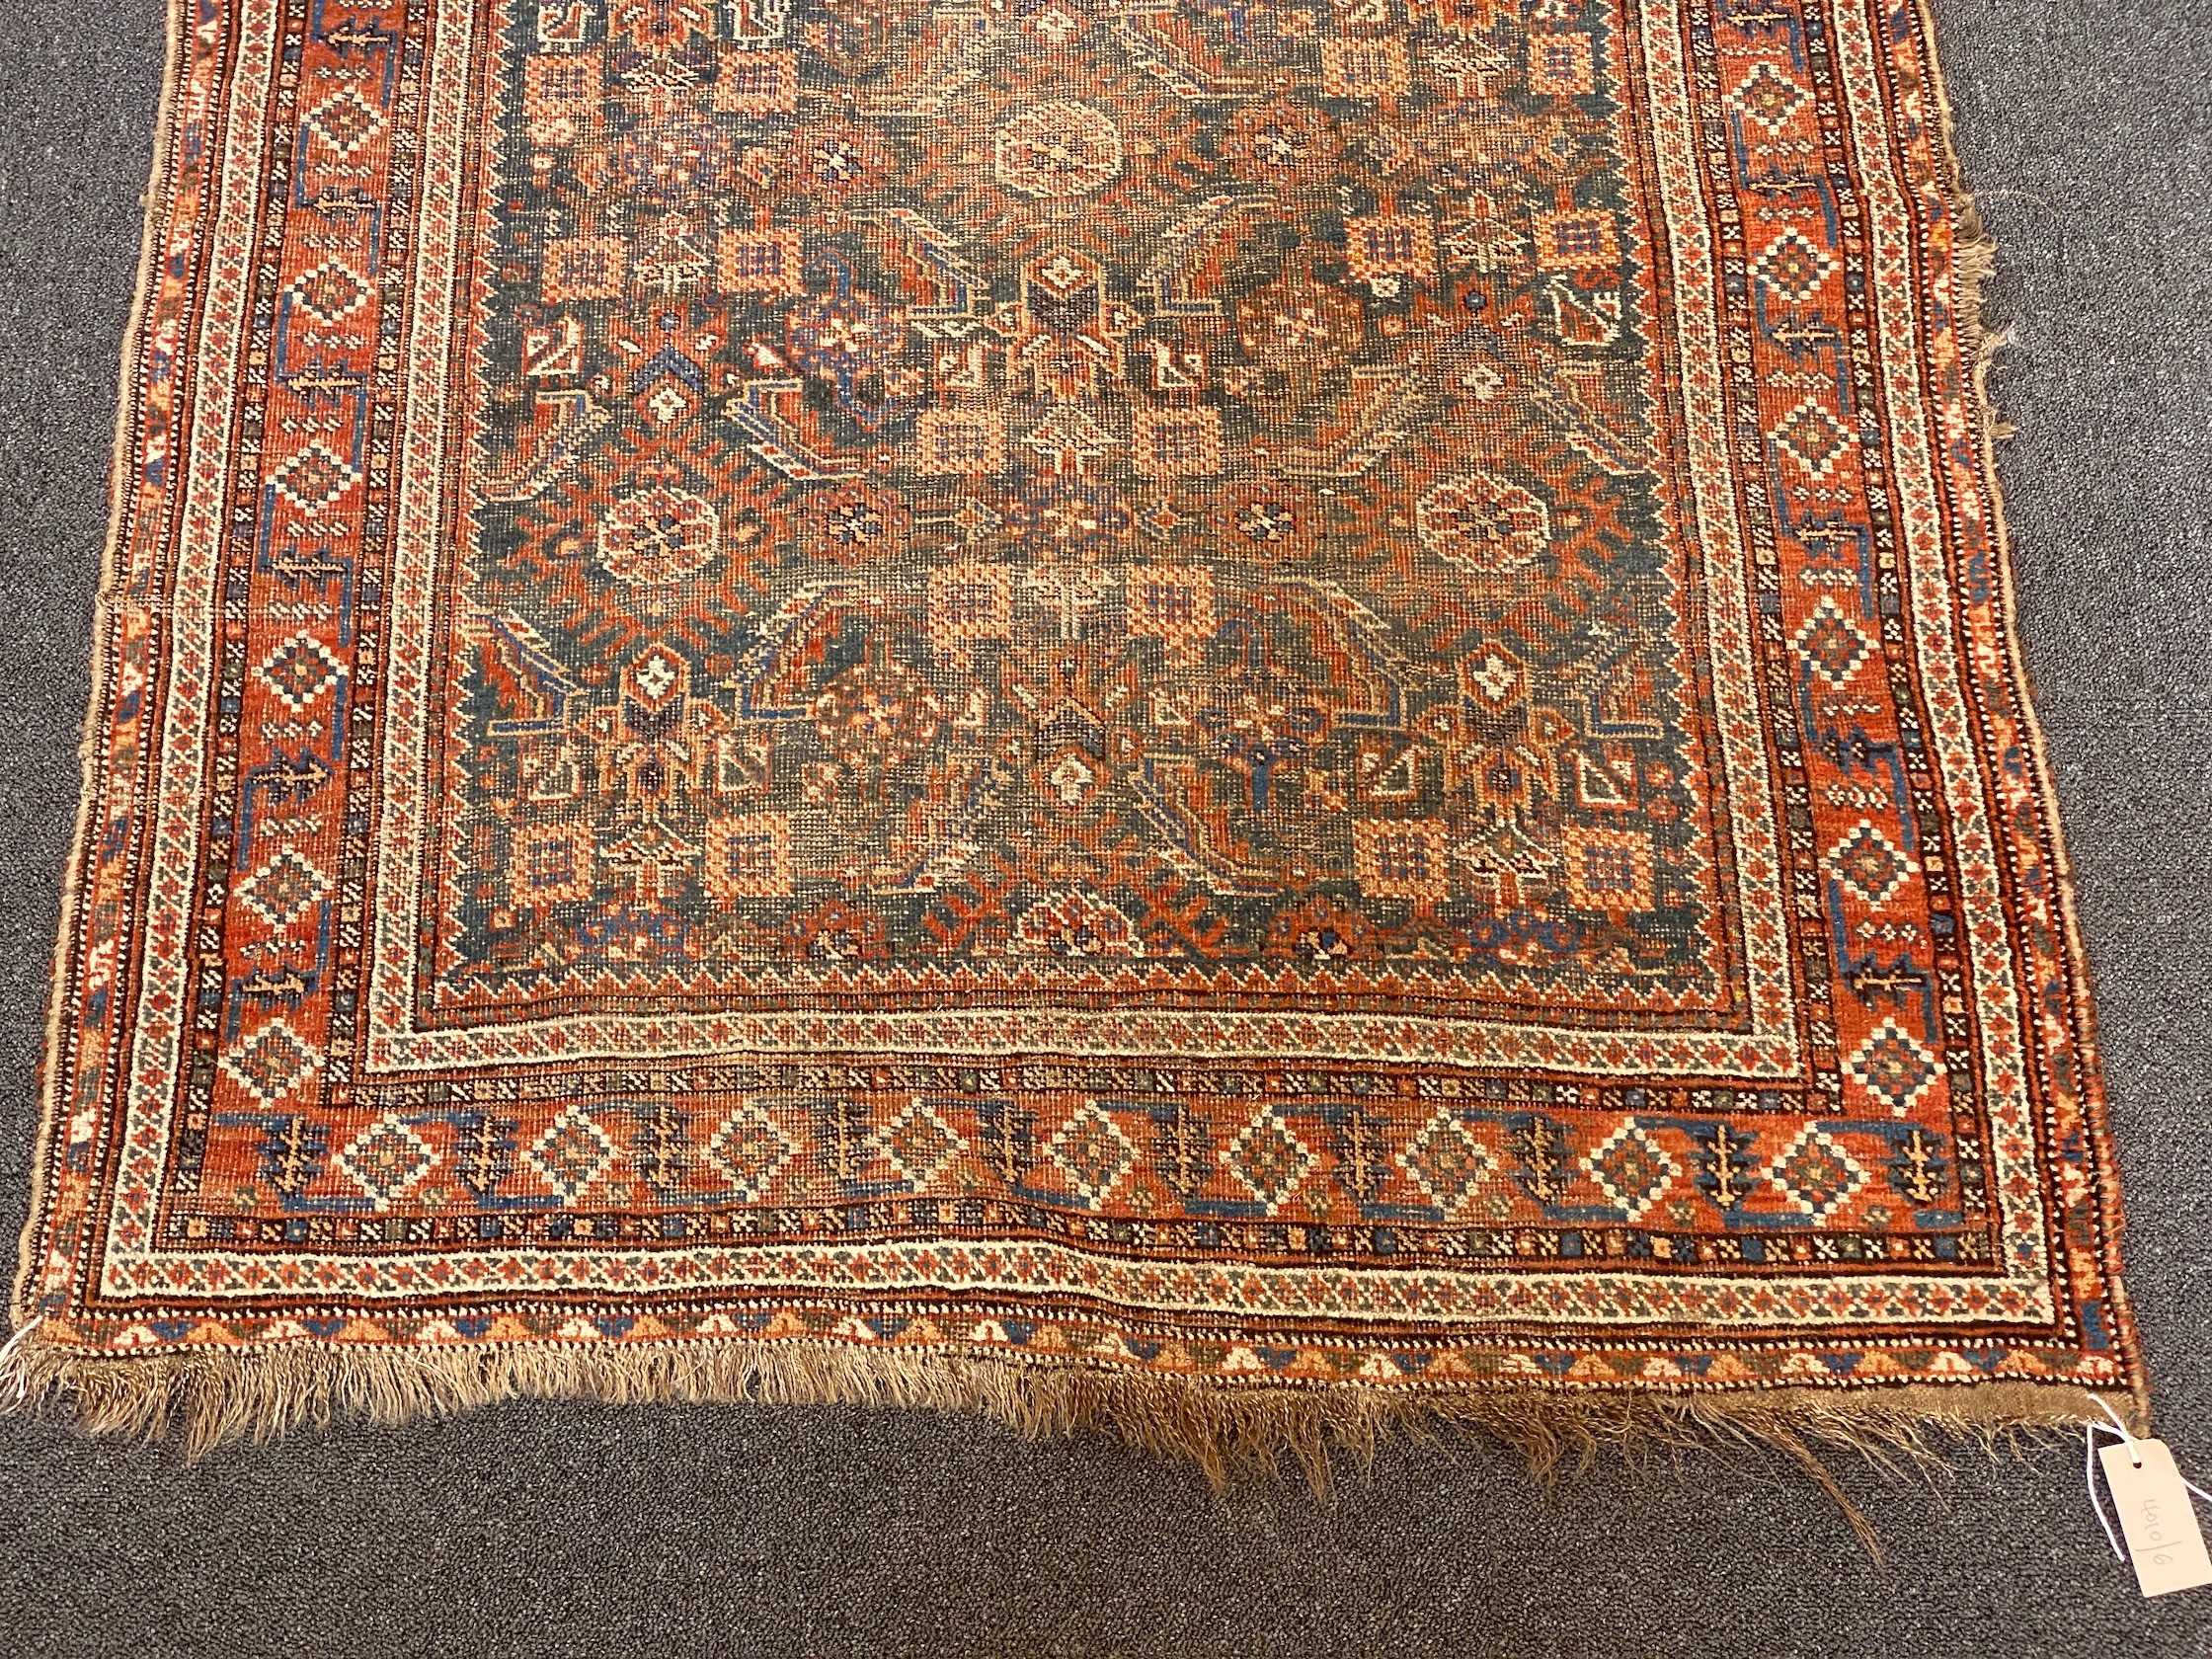 A Shiraz blue ground rug with dense floral field (worn), 144 x 102 cms